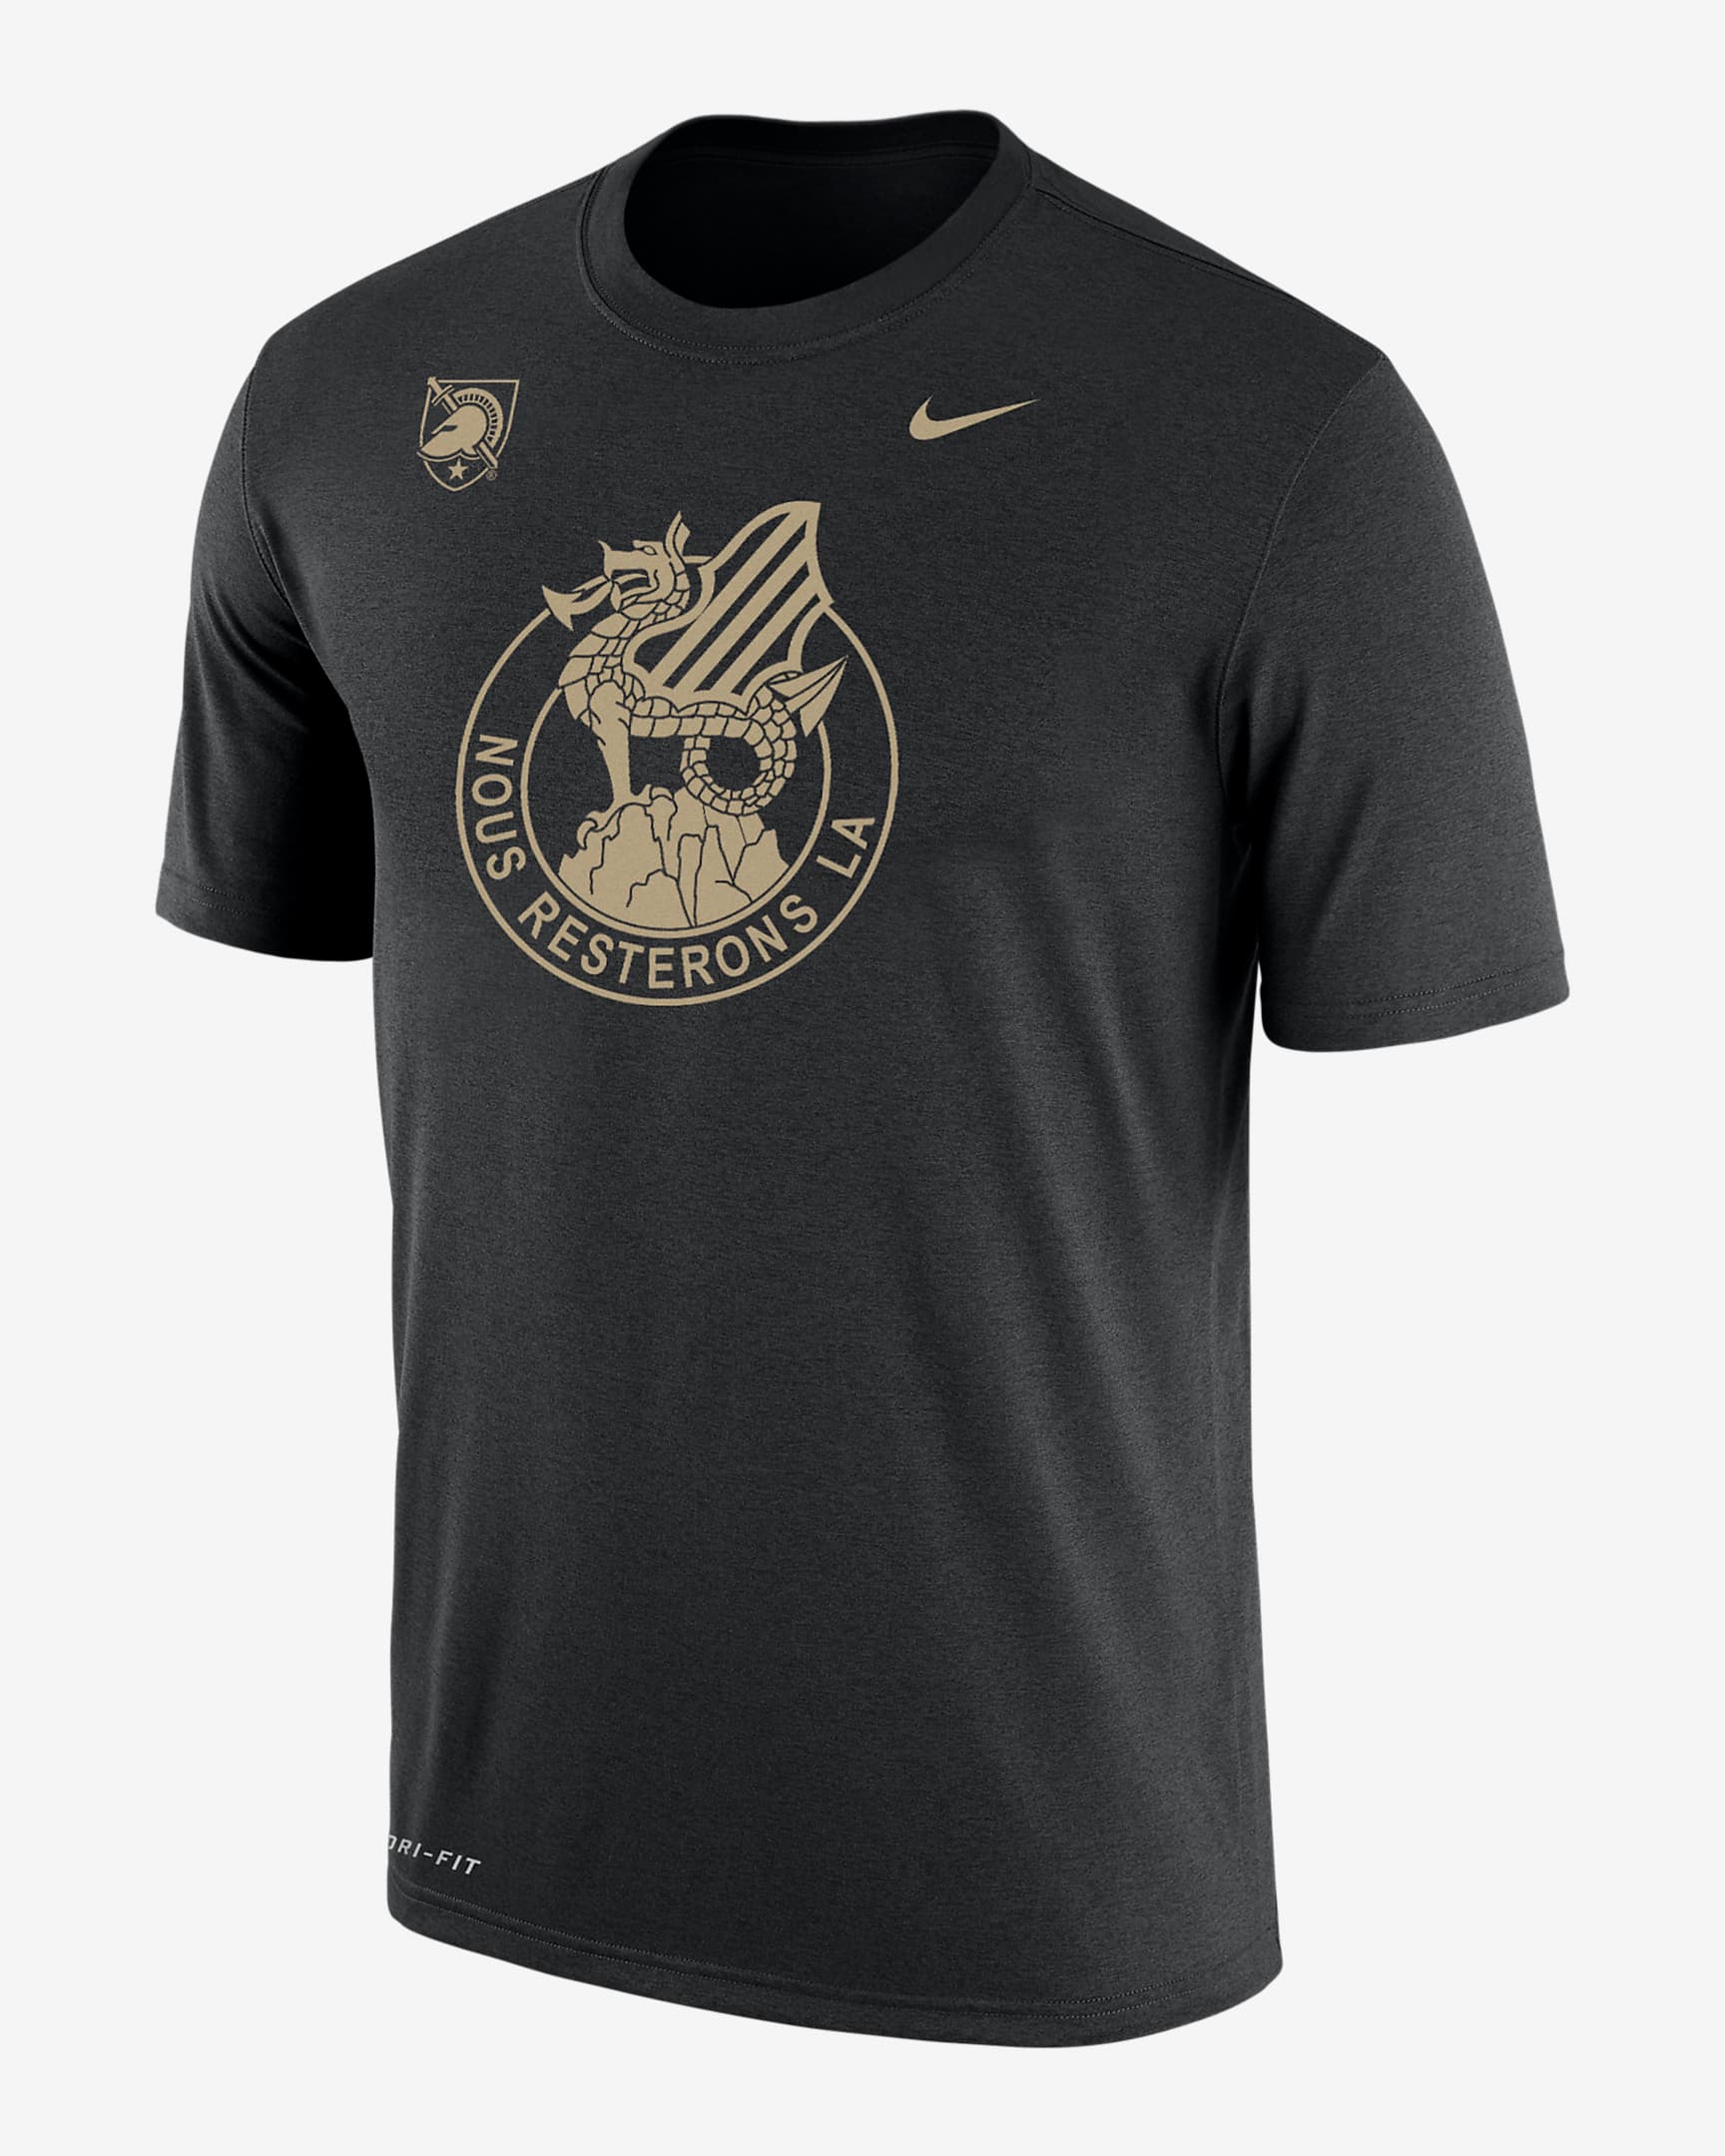 Army Men's Nike Dri-FIT College T-Shirt. Nike.com